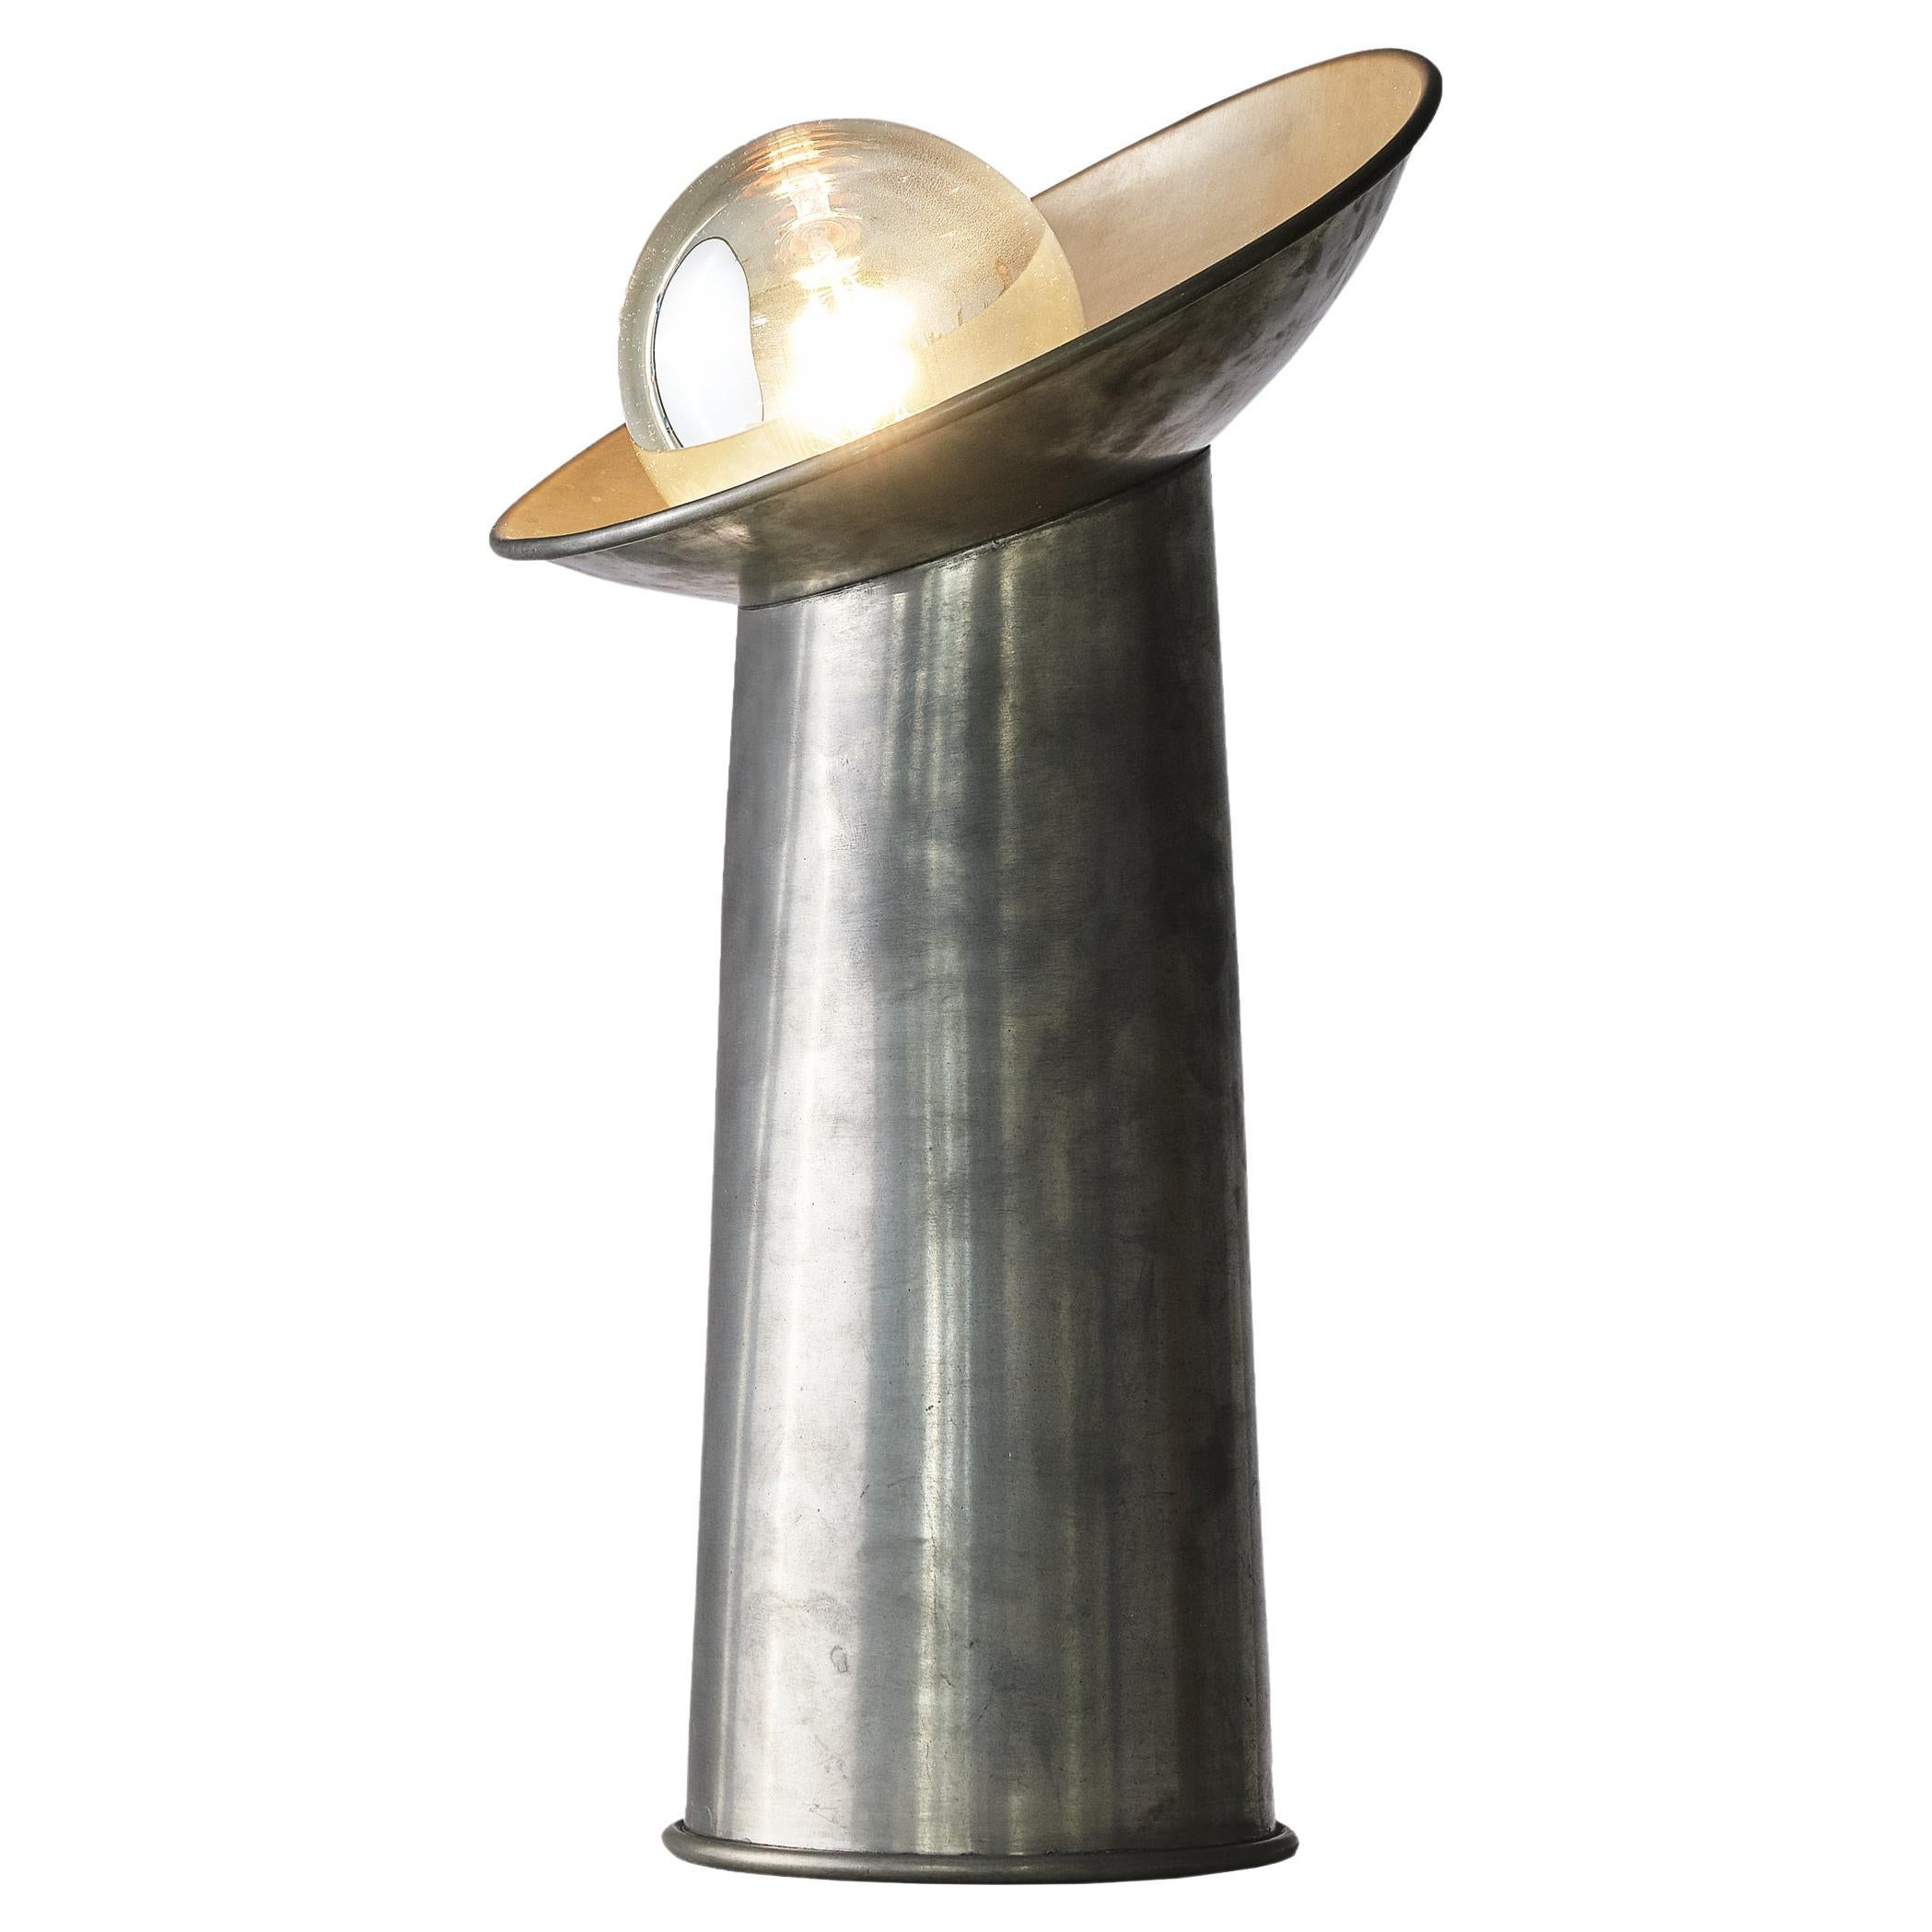 Gjlla Giani for Nucleo Sormani ‘Radar’ Table Lamp in Pewter